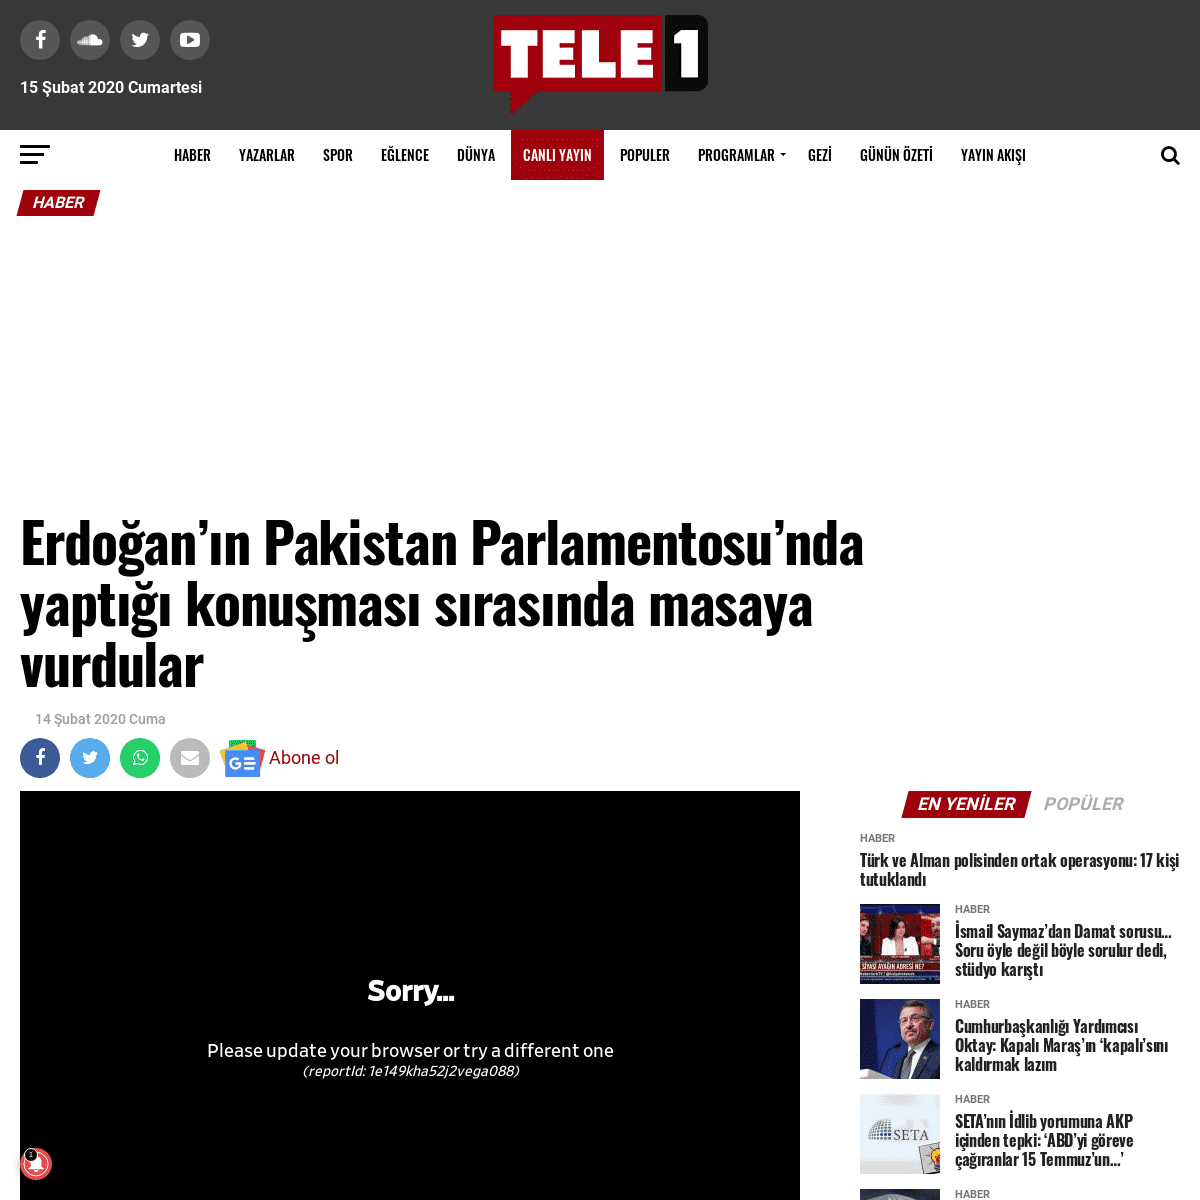 A complete backup of tele1.com.tr/erdoganin-pakistan-parlamentosunda-yaptigi-konusmasi-sirasinda-masaya-vurdular-130095/